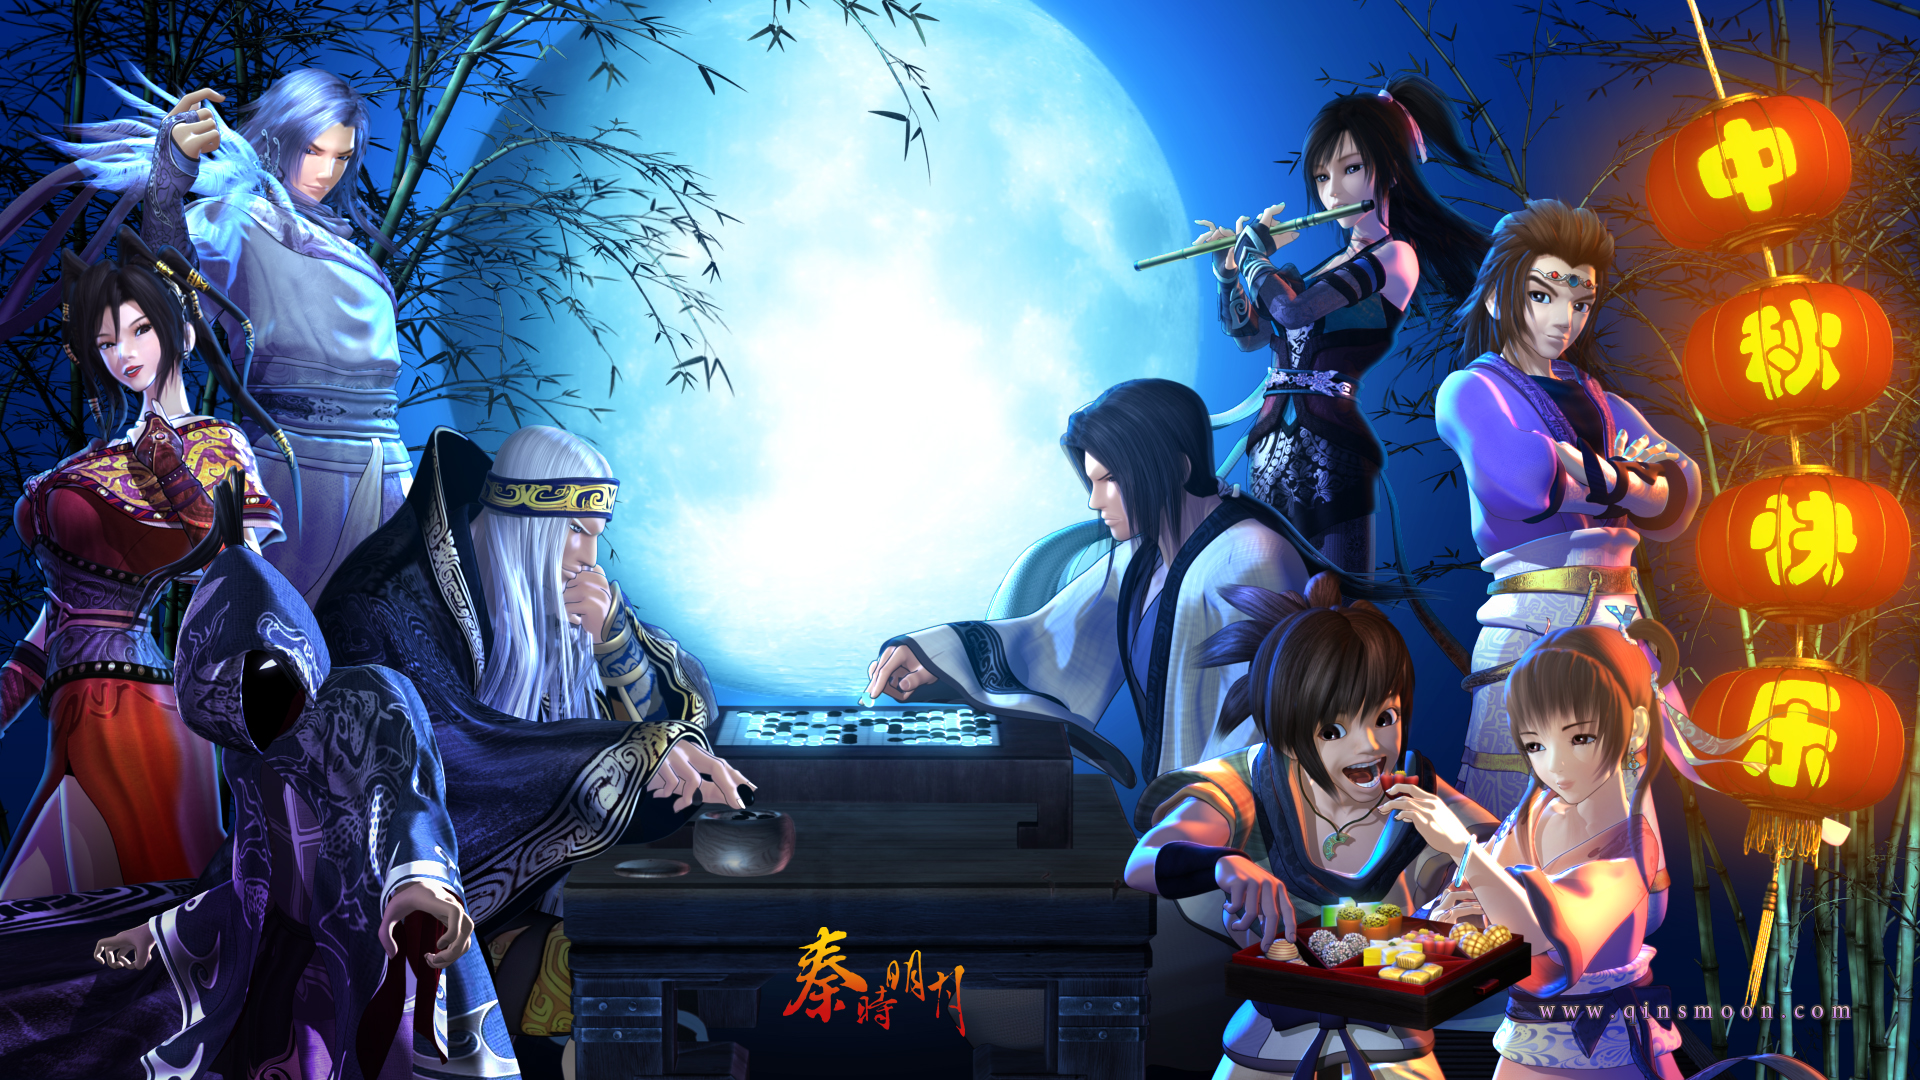 Qin Moon HD wallpapers, Desktop wallpaper - most viewed